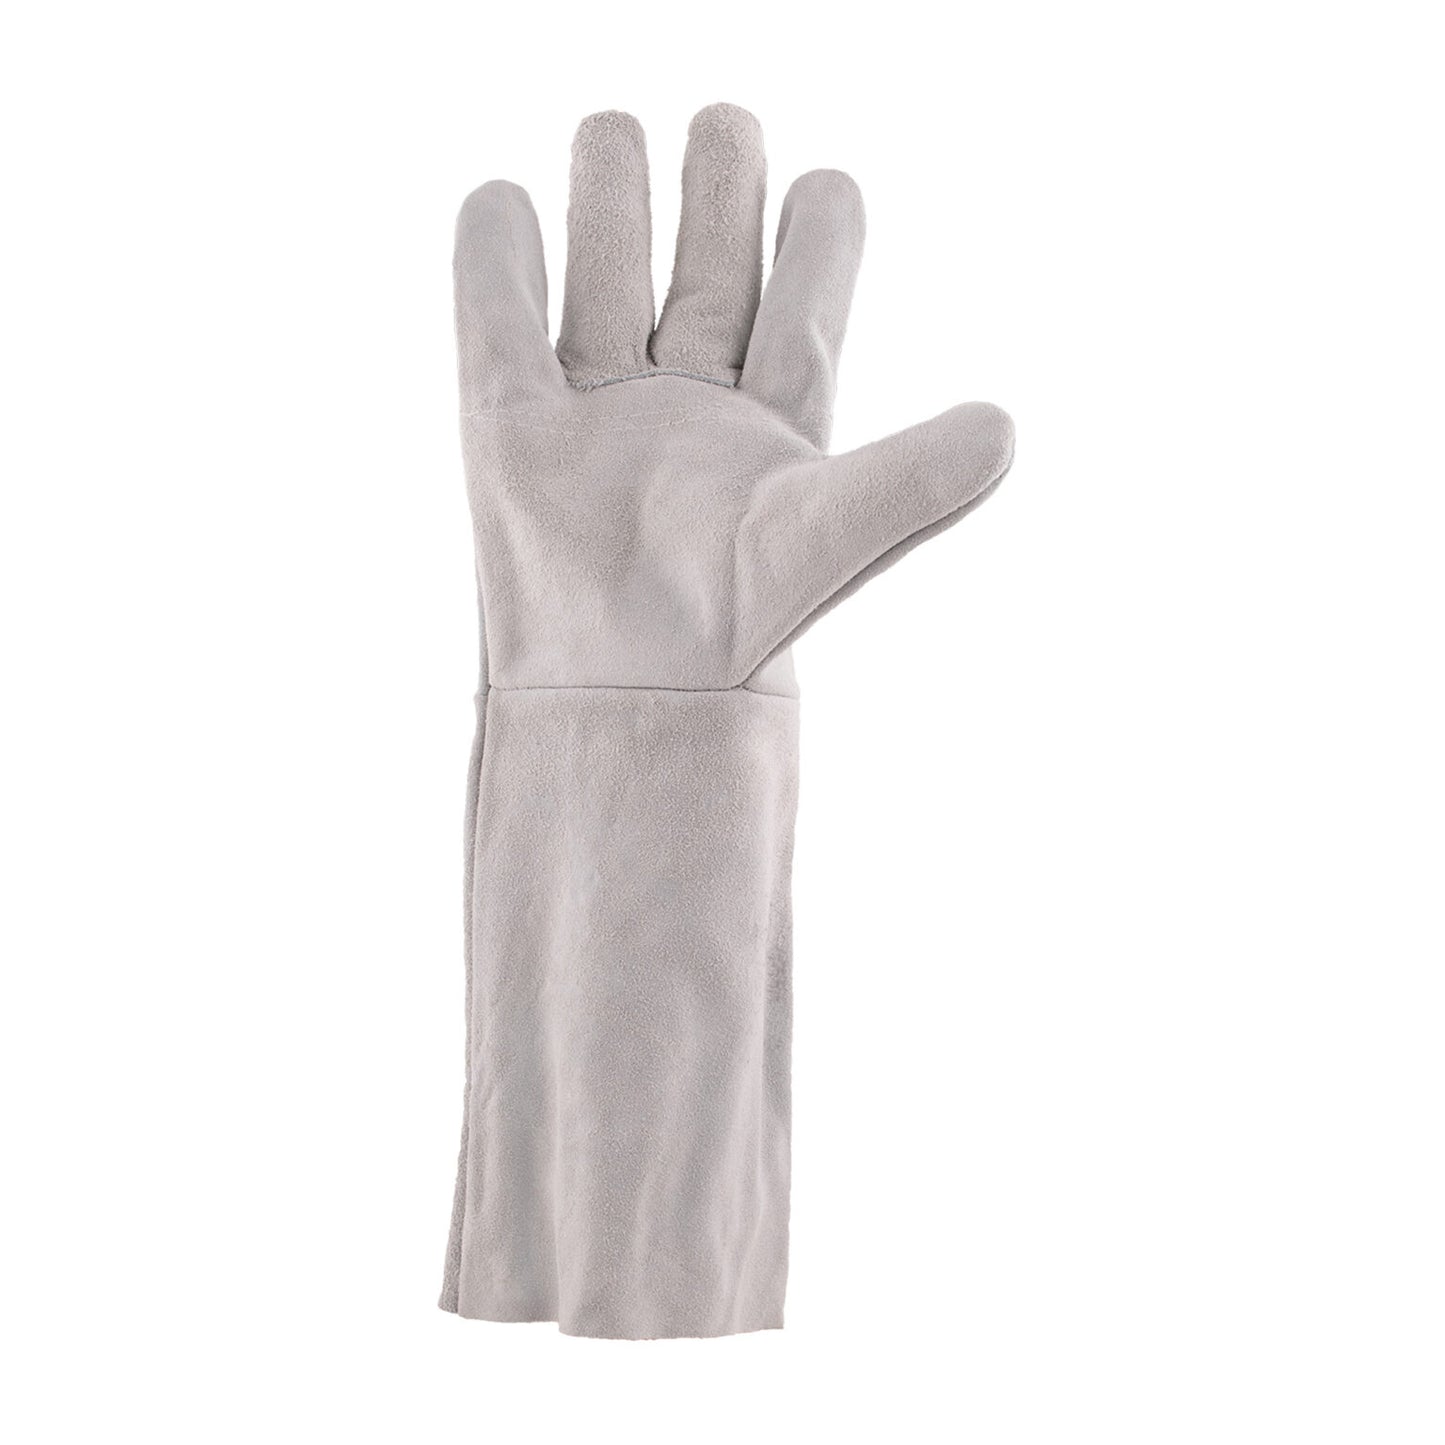 Chrome Leather Gloves Elbow Length (12 Gloves)